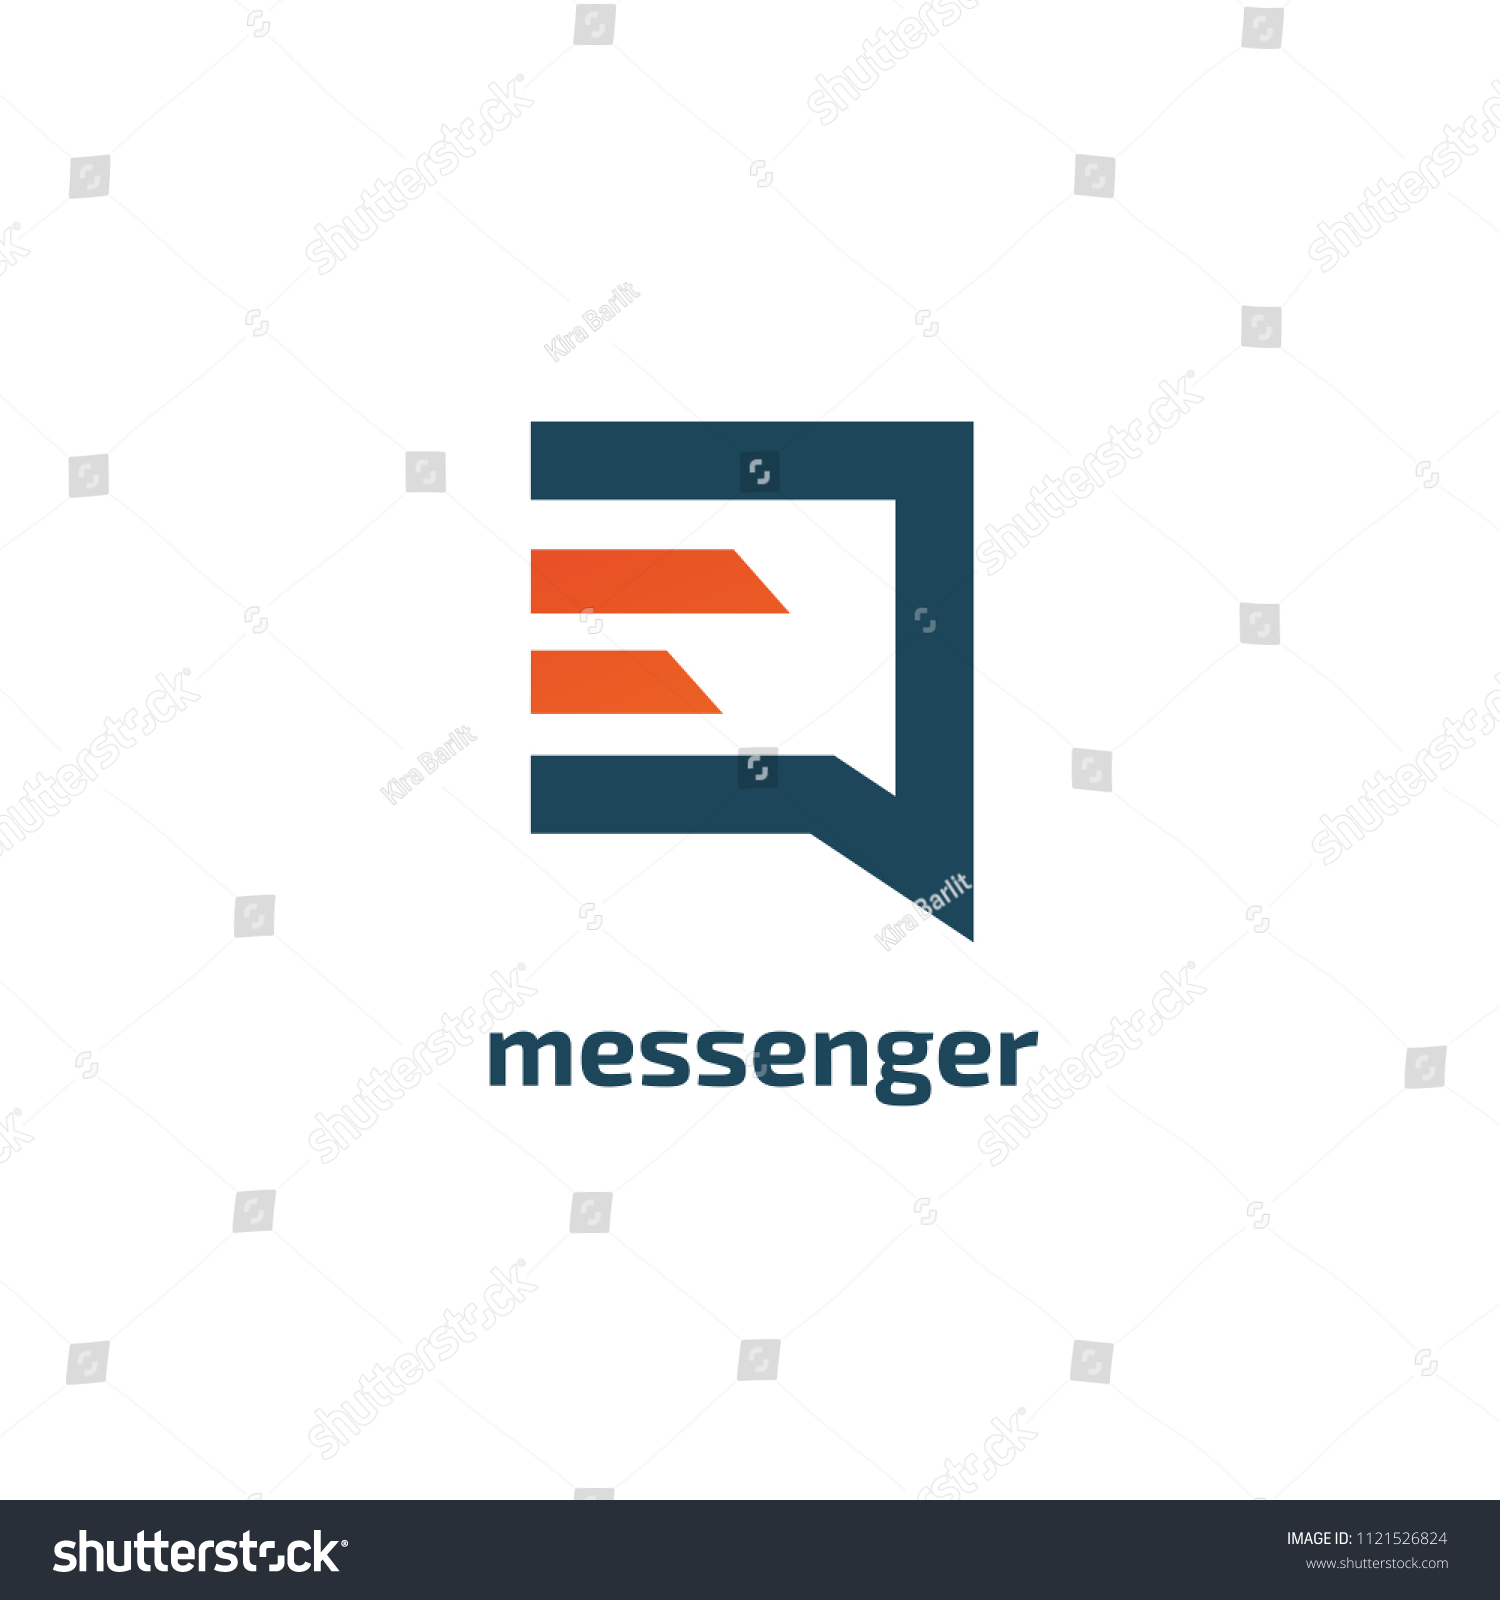 Logo Concept Chat Media Dialogue Script Stock Vector Royalty Free